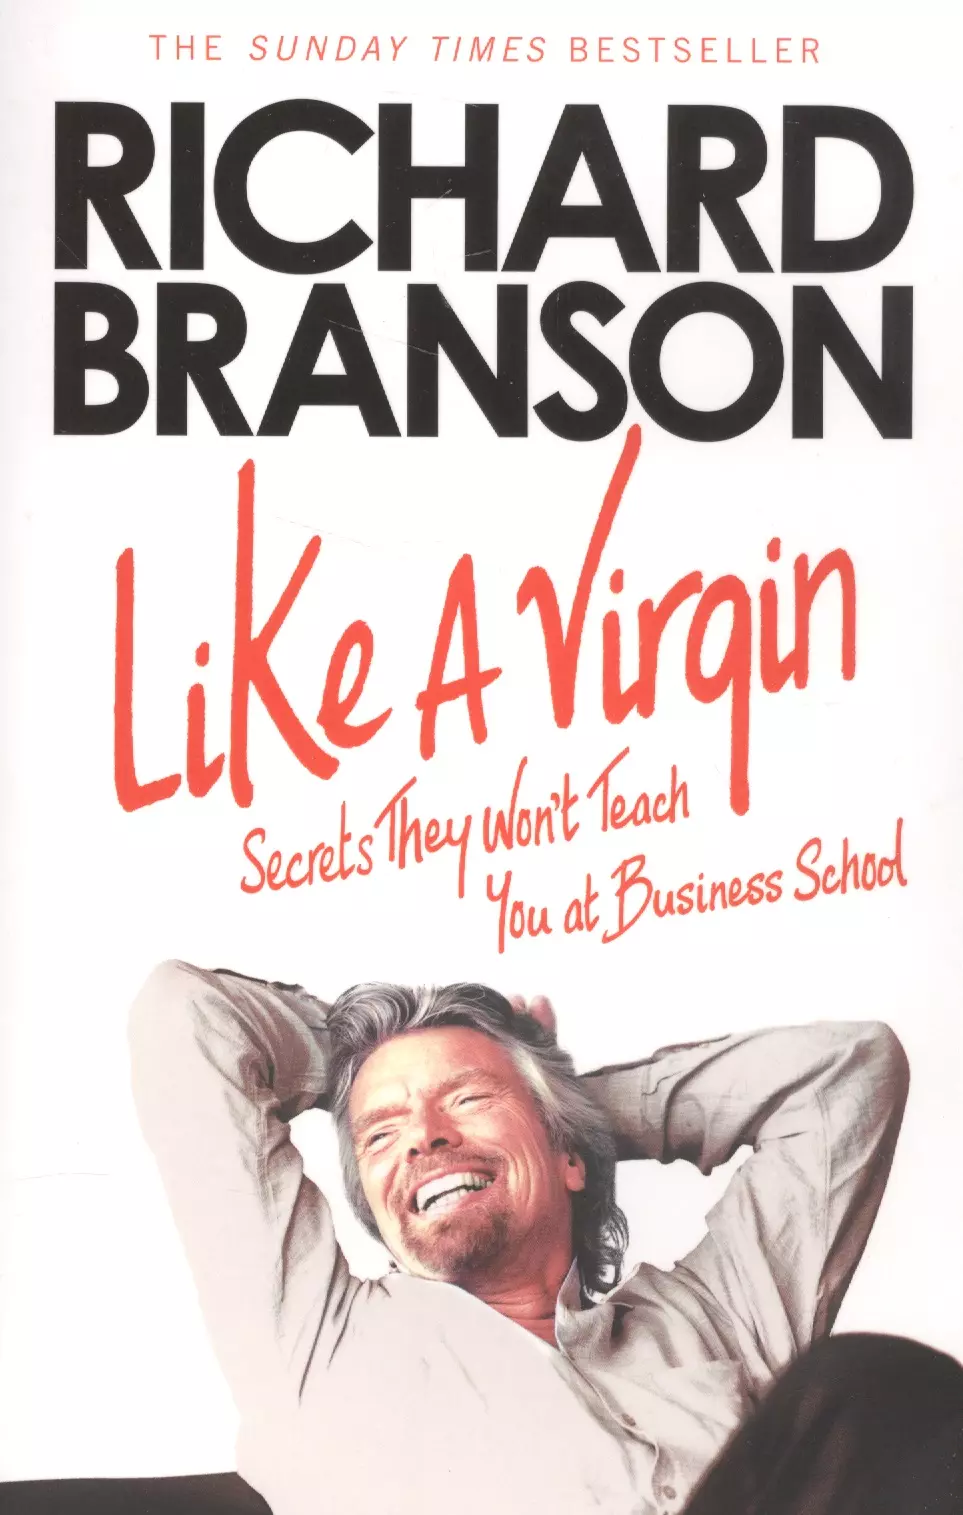 Брэнсон Ричард, Branson Richard - Like A Virgin Secrets They Wont Teach You at Business School